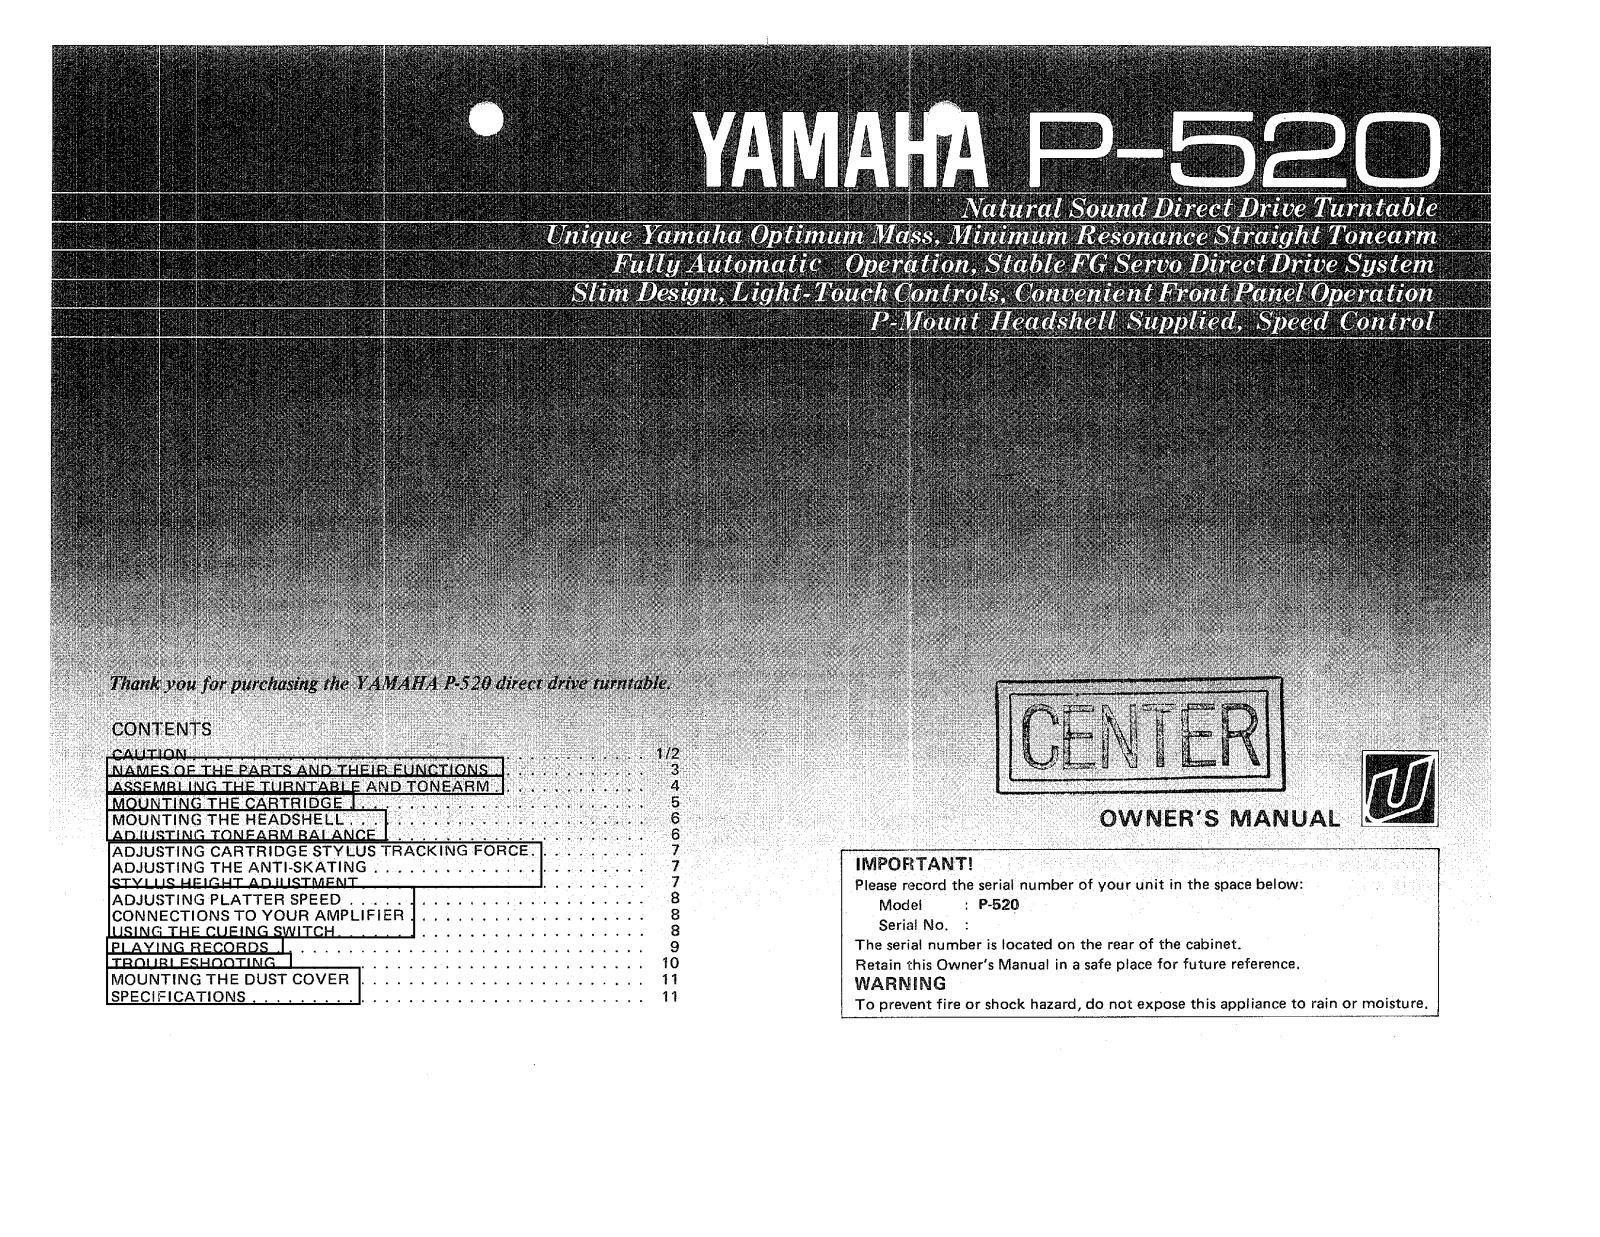 Yamaha P-520 Owners manual